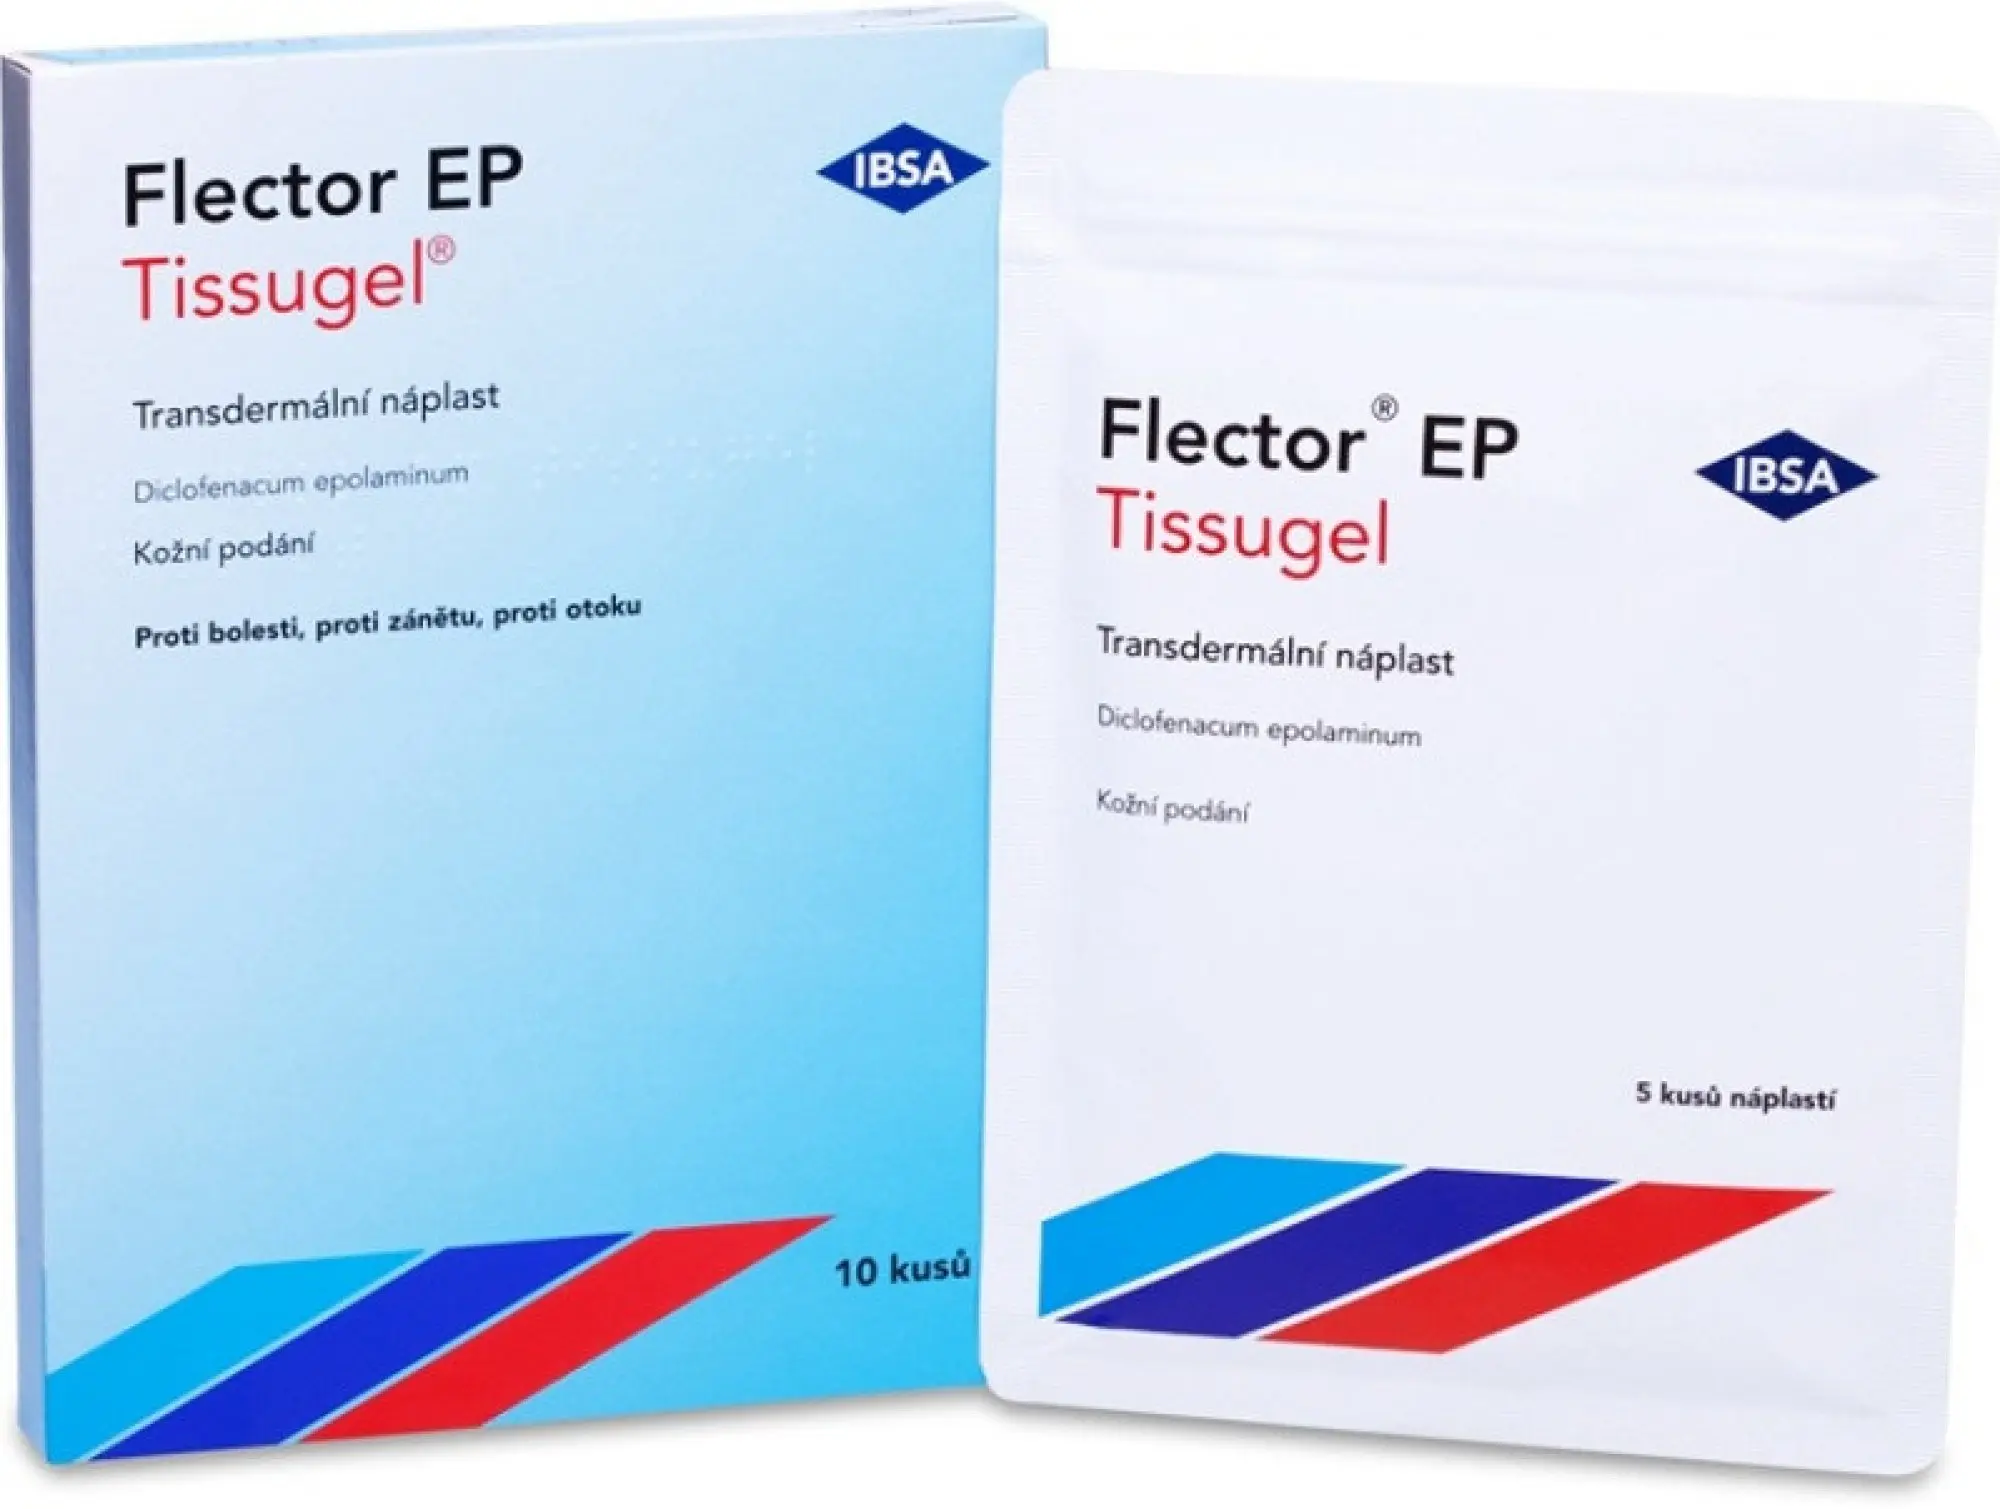 Flector EP Tissugel 180 mg.tdr.emp.10 ks